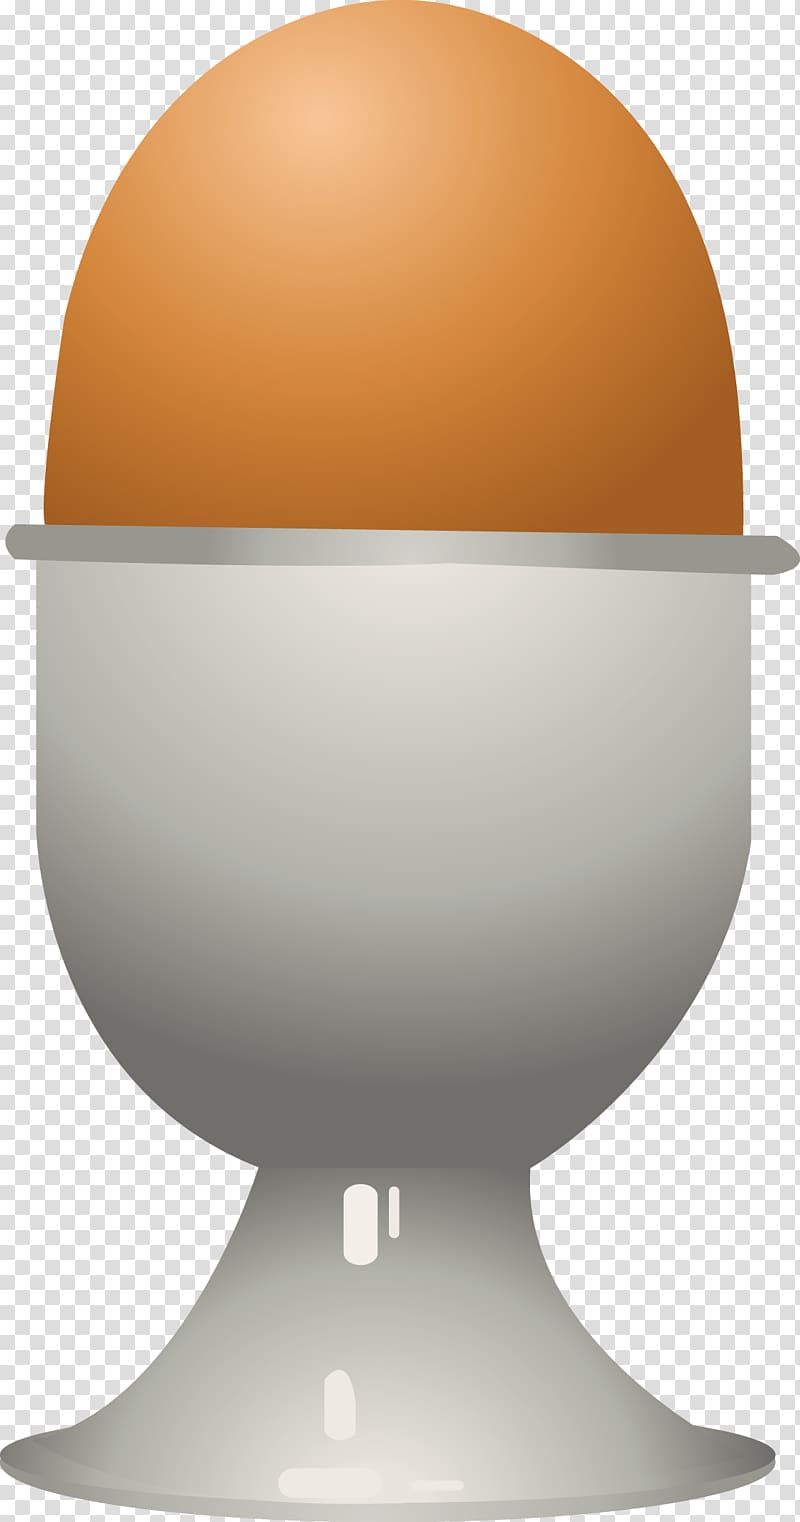 Cartoon Egg, Eggs transparent background PNG clipart